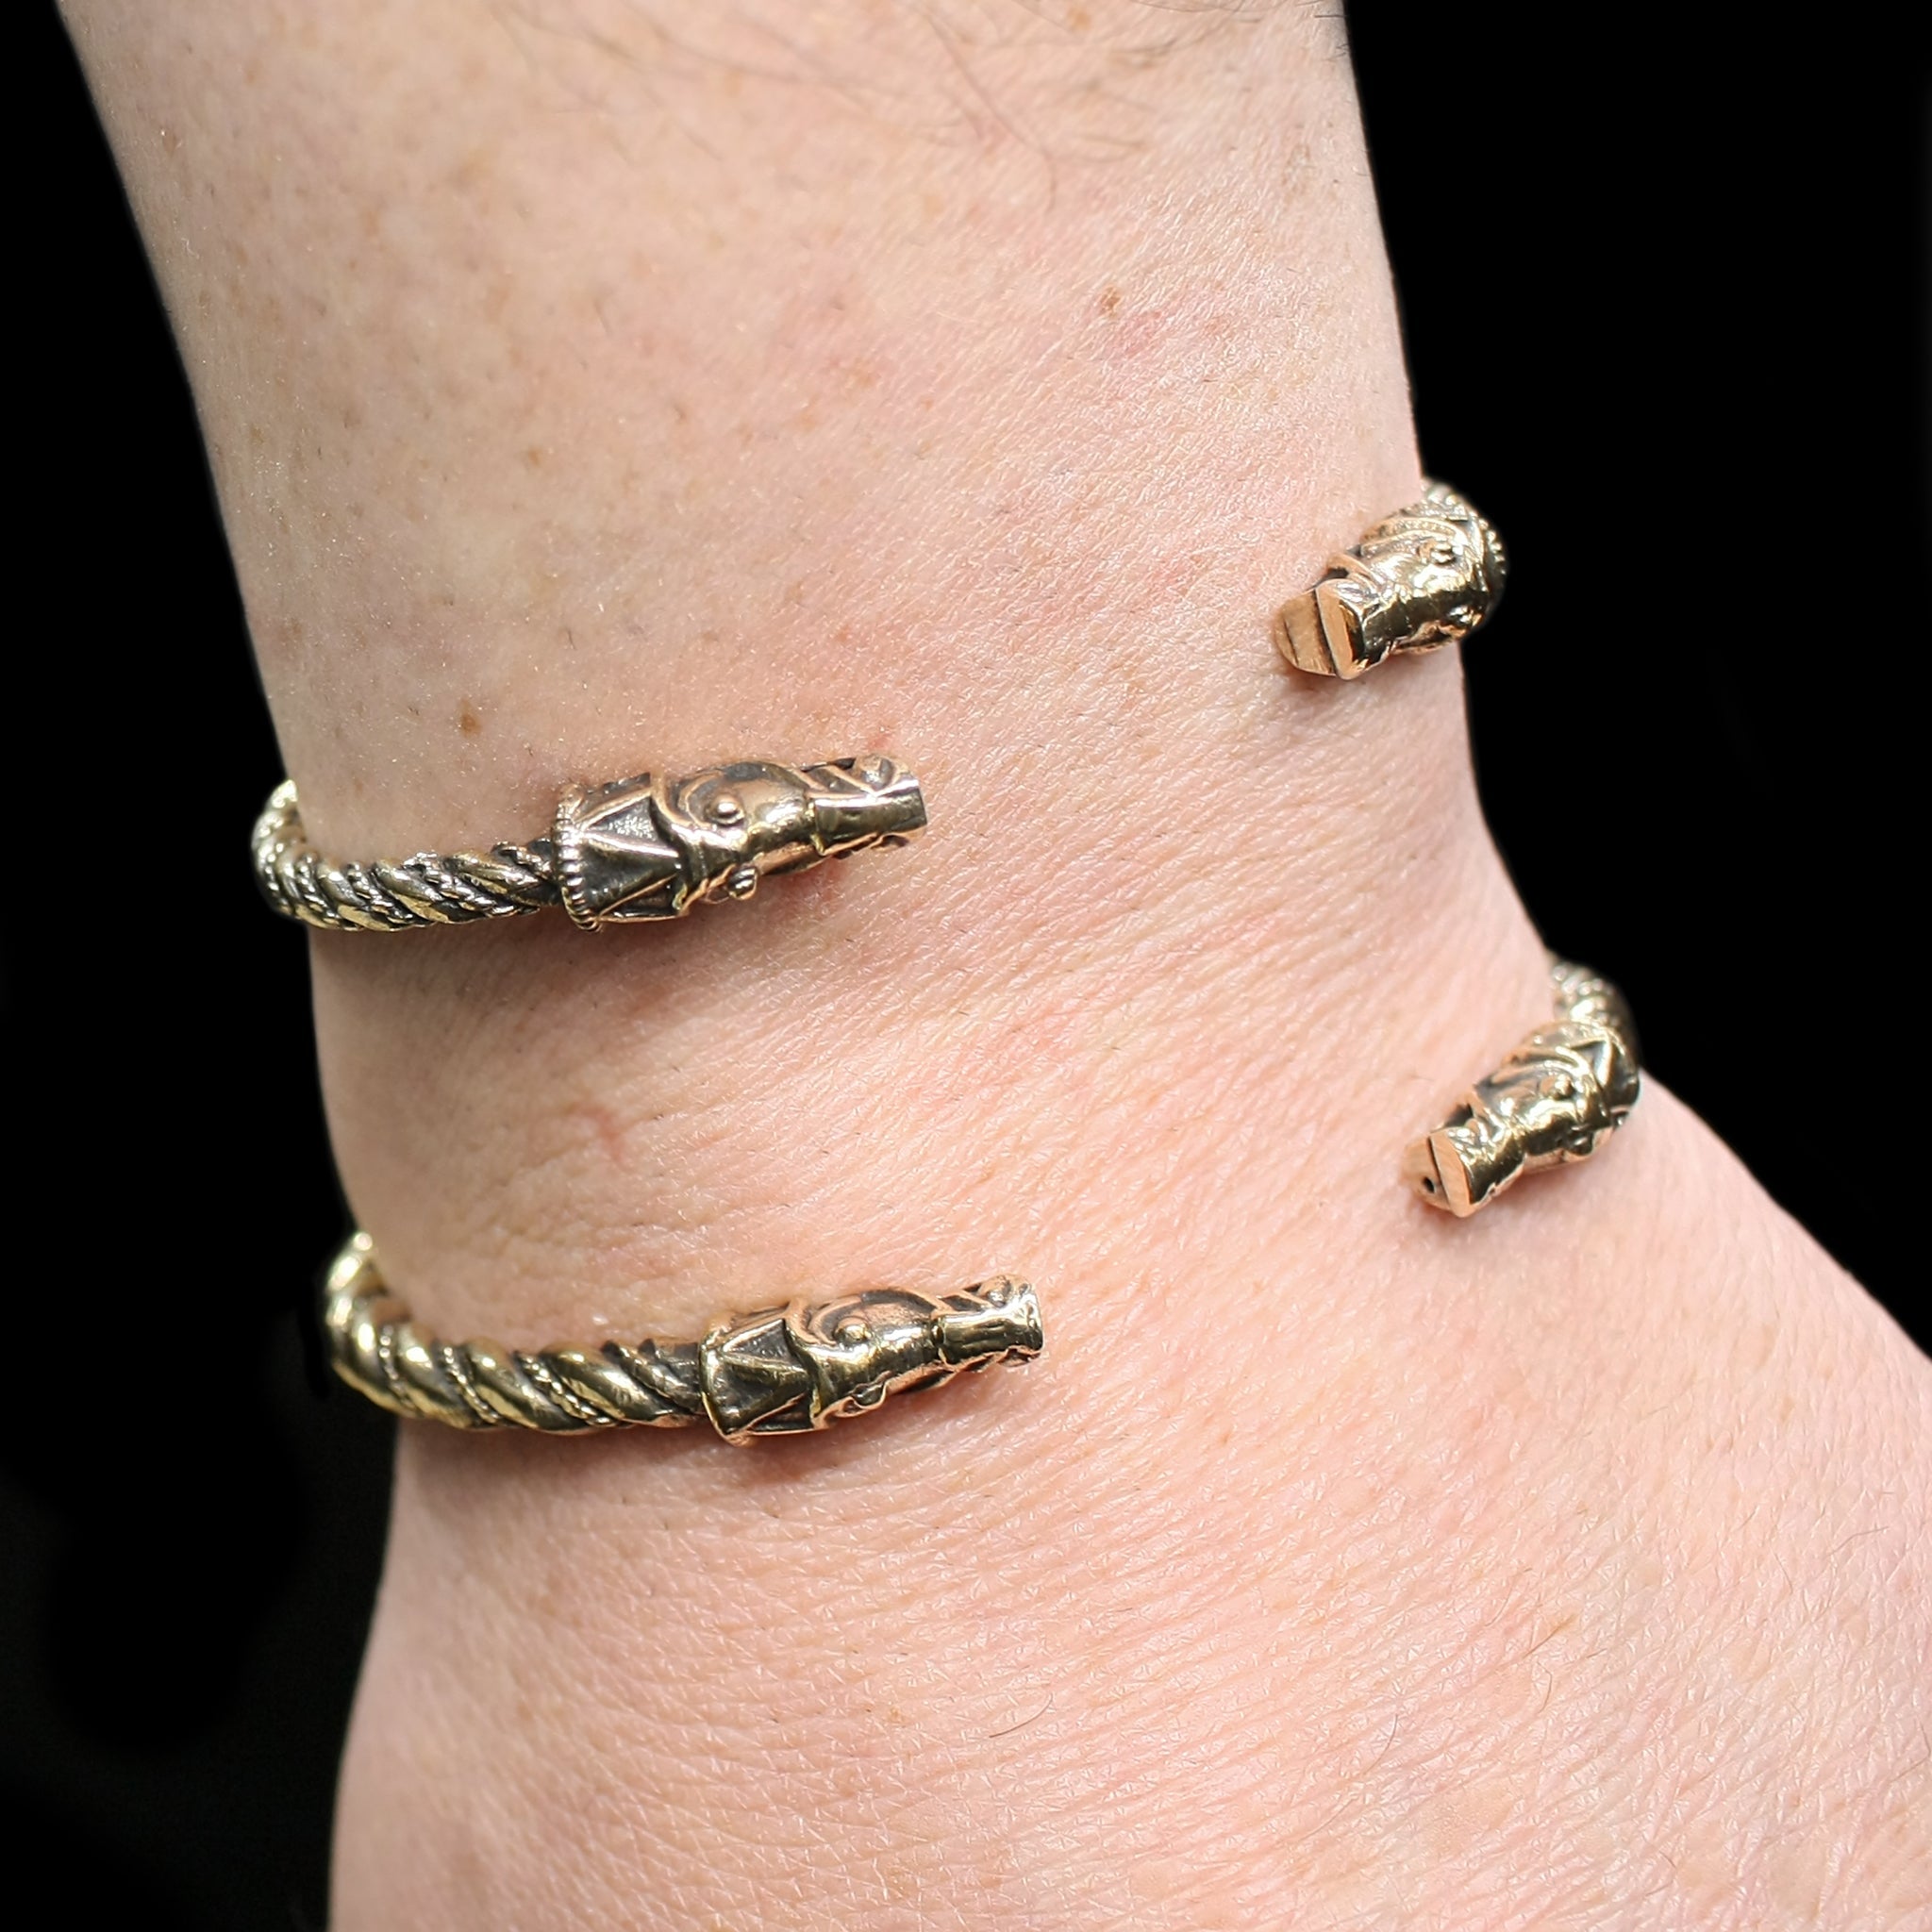 Twisted Bronze Bracelets With Gotlandic Dragon Heads on Wrist